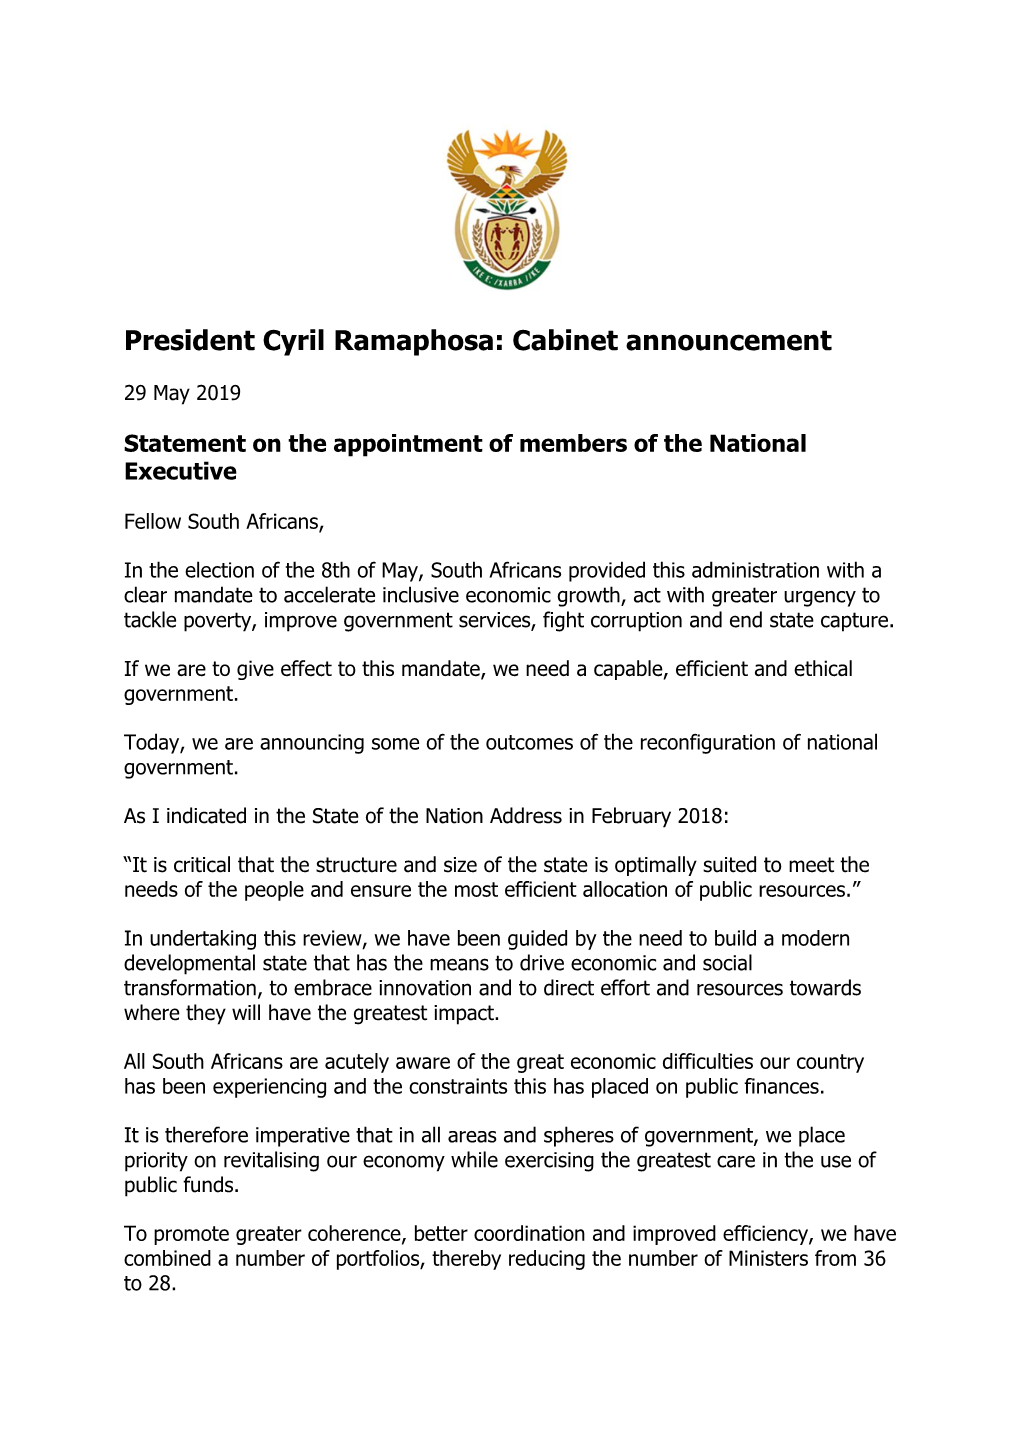 President Cyril Ramaphosa: Cabinet Announcement